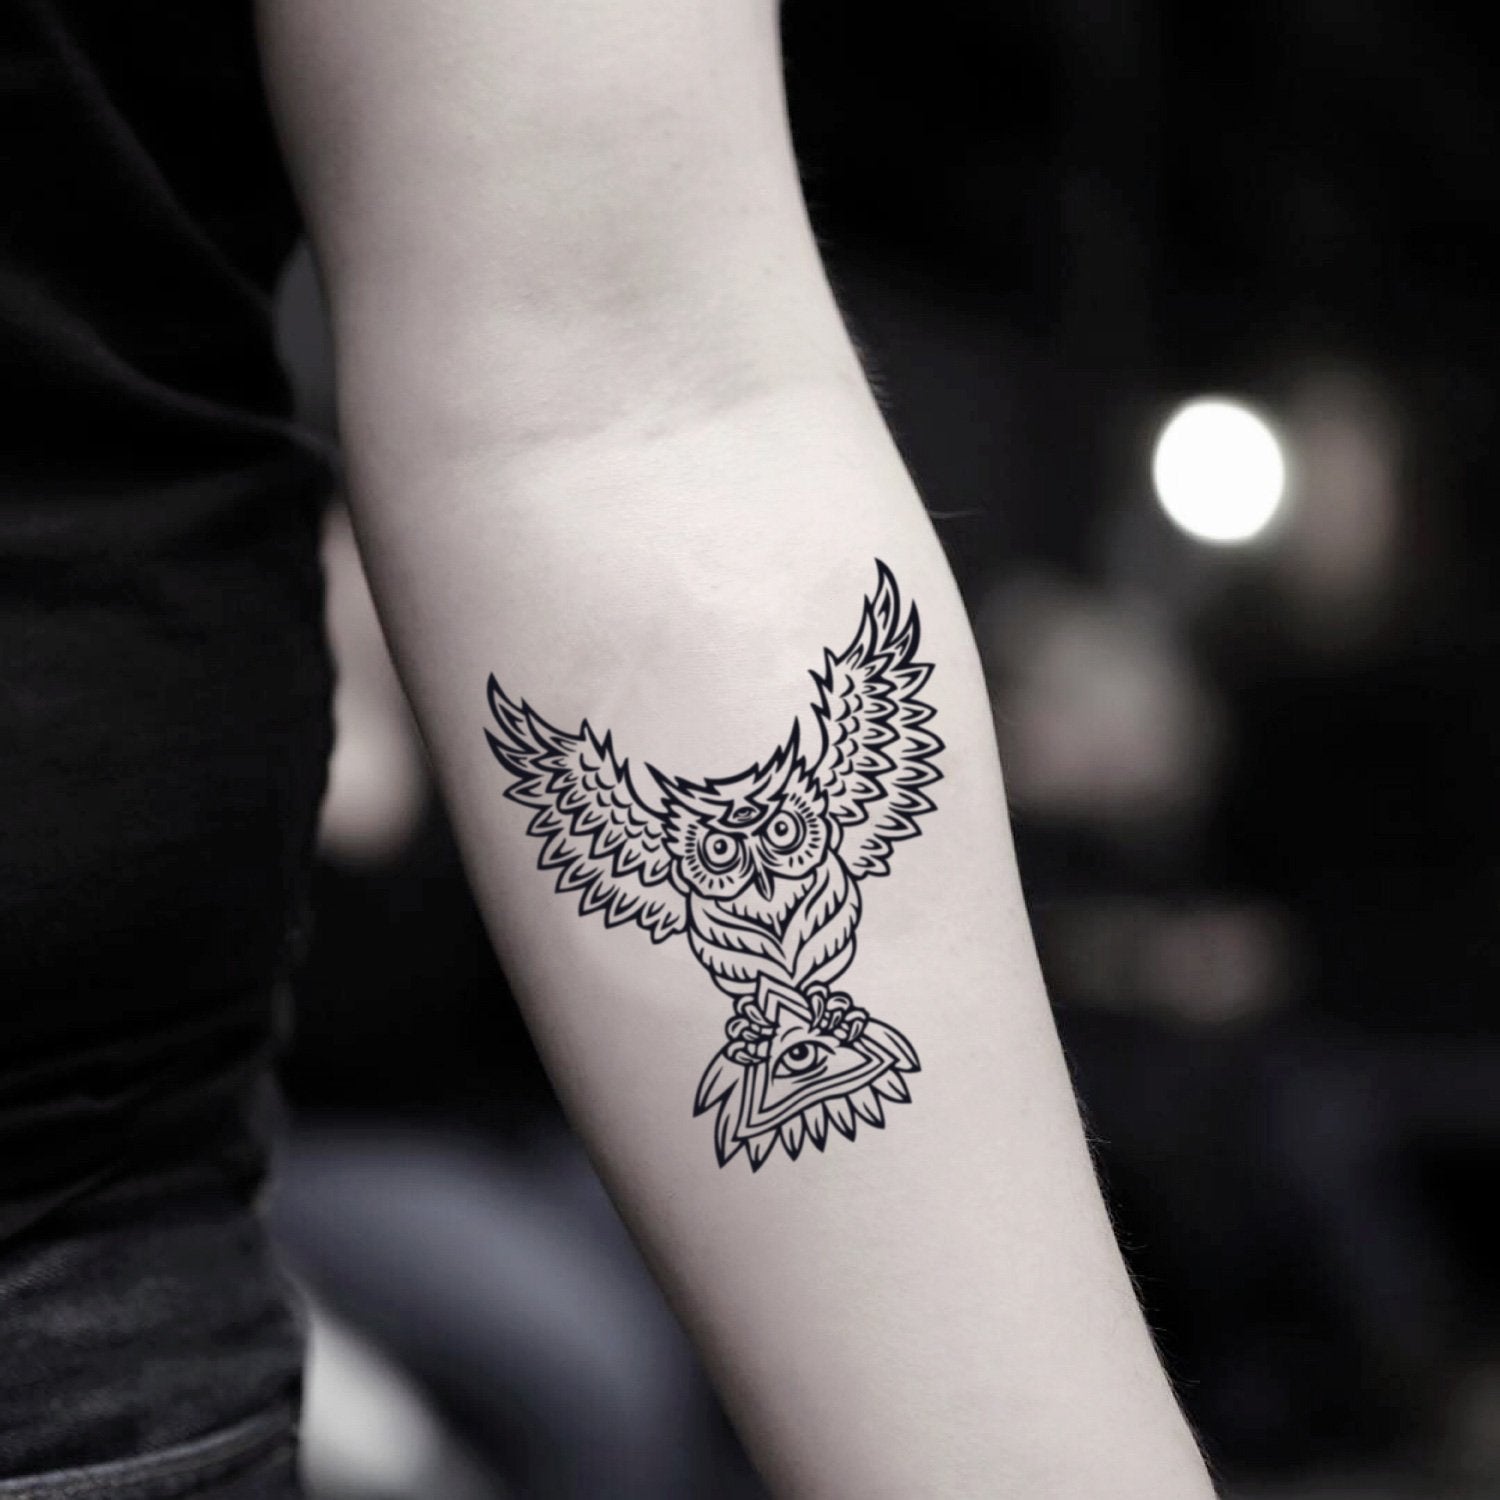 21 Small Owl Tattoo Ideas For Women - Styleoholic